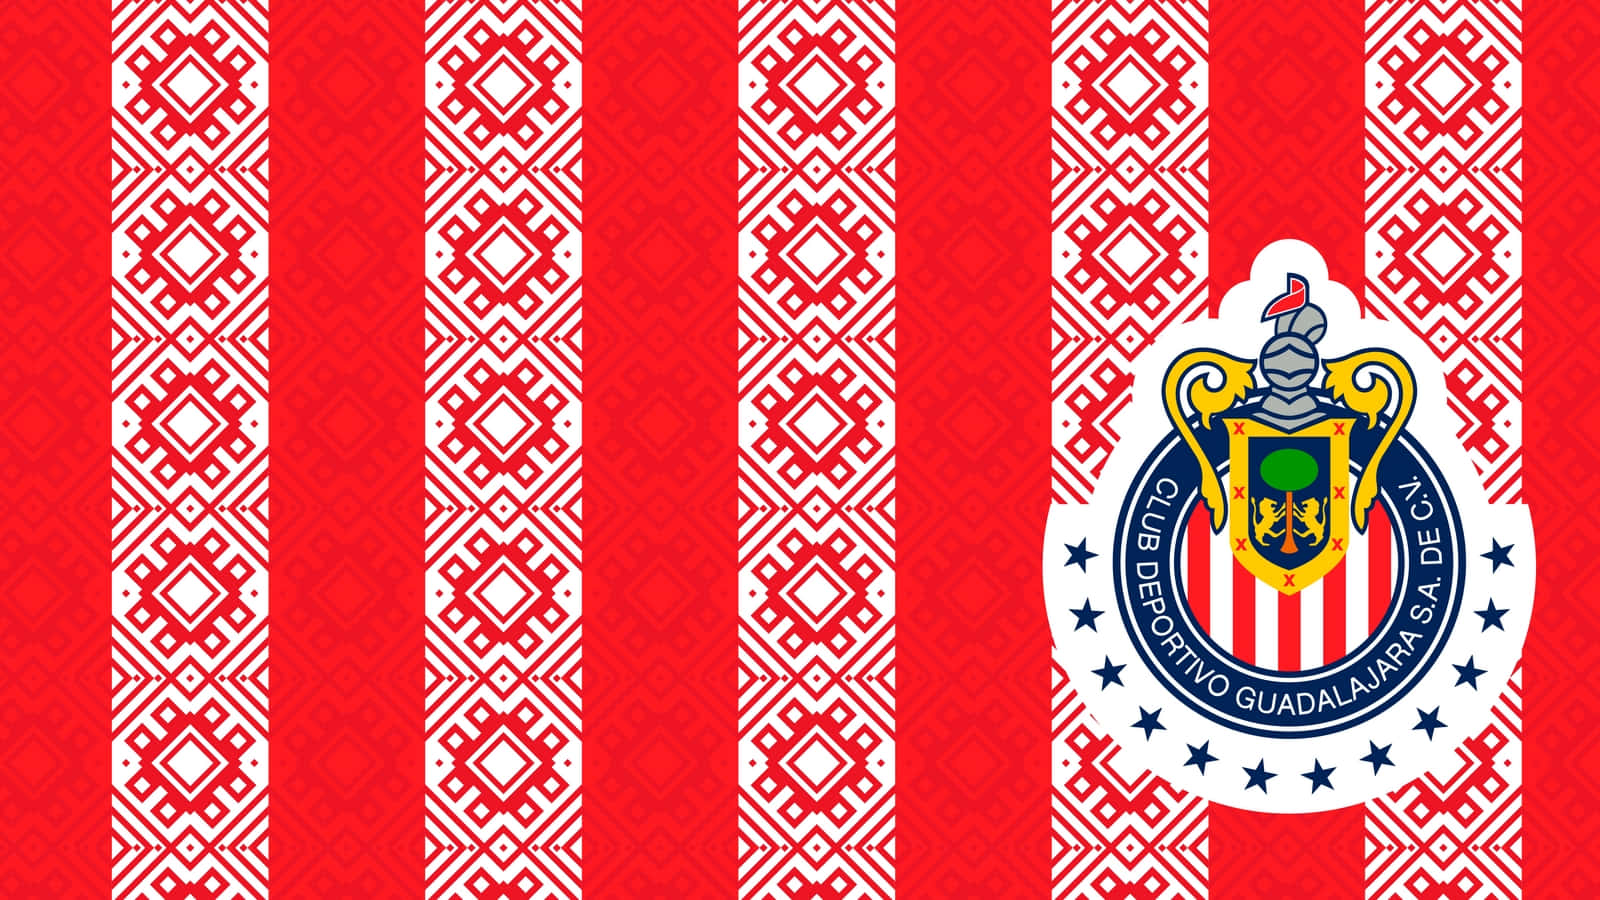 Chivas Guadalajara Football Club Crest Wallpaper